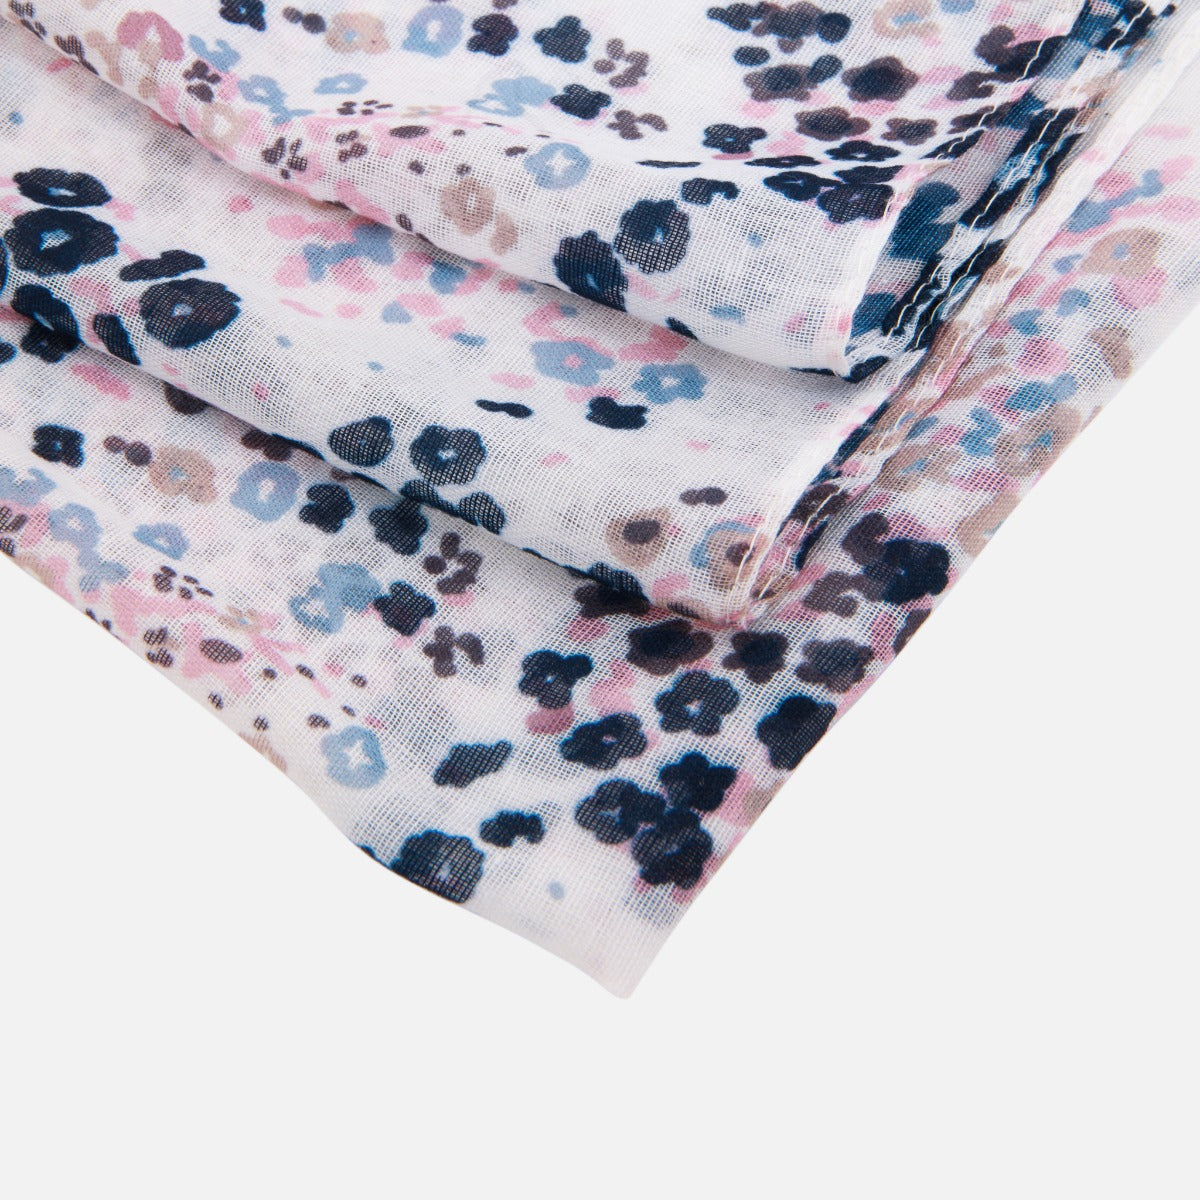 Foulard rectangle gris avec pois roses et bleus